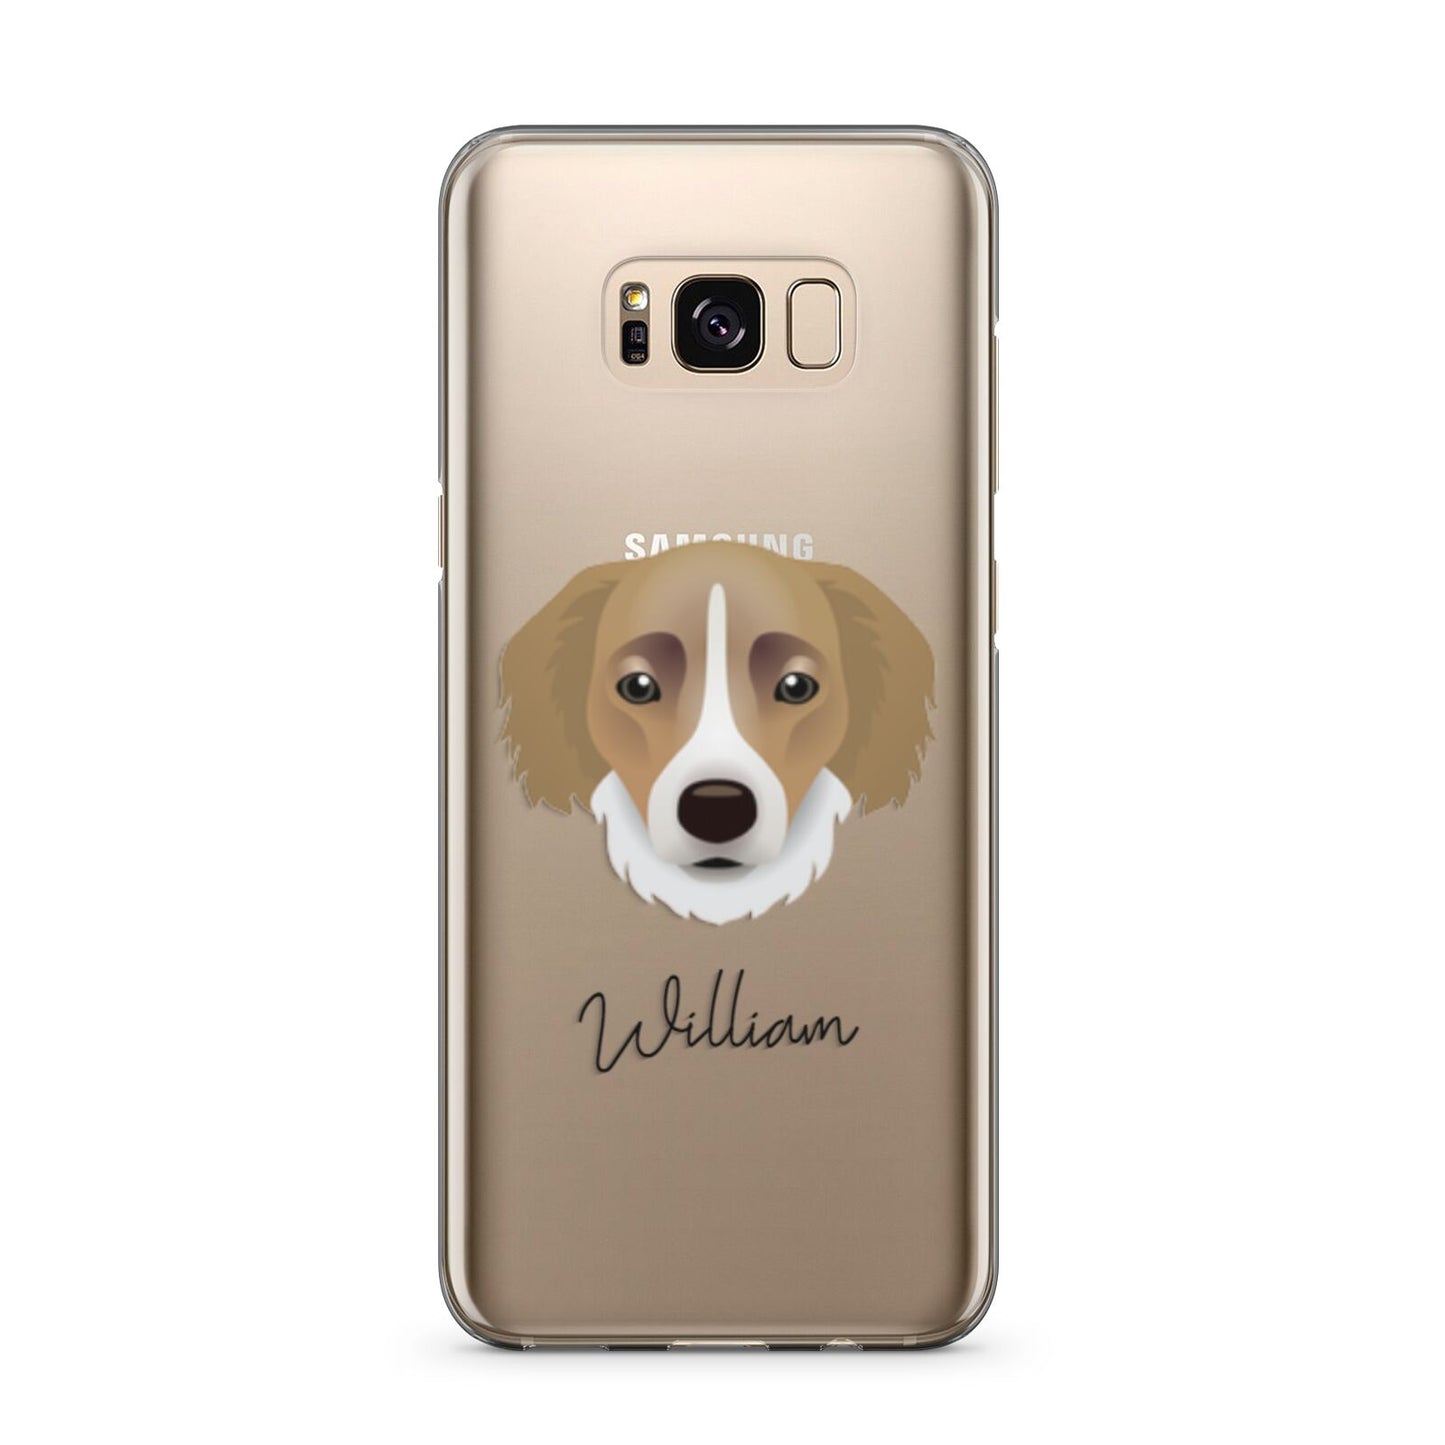 Siberian Cocker Personalised Samsung Galaxy S8 Plus Case